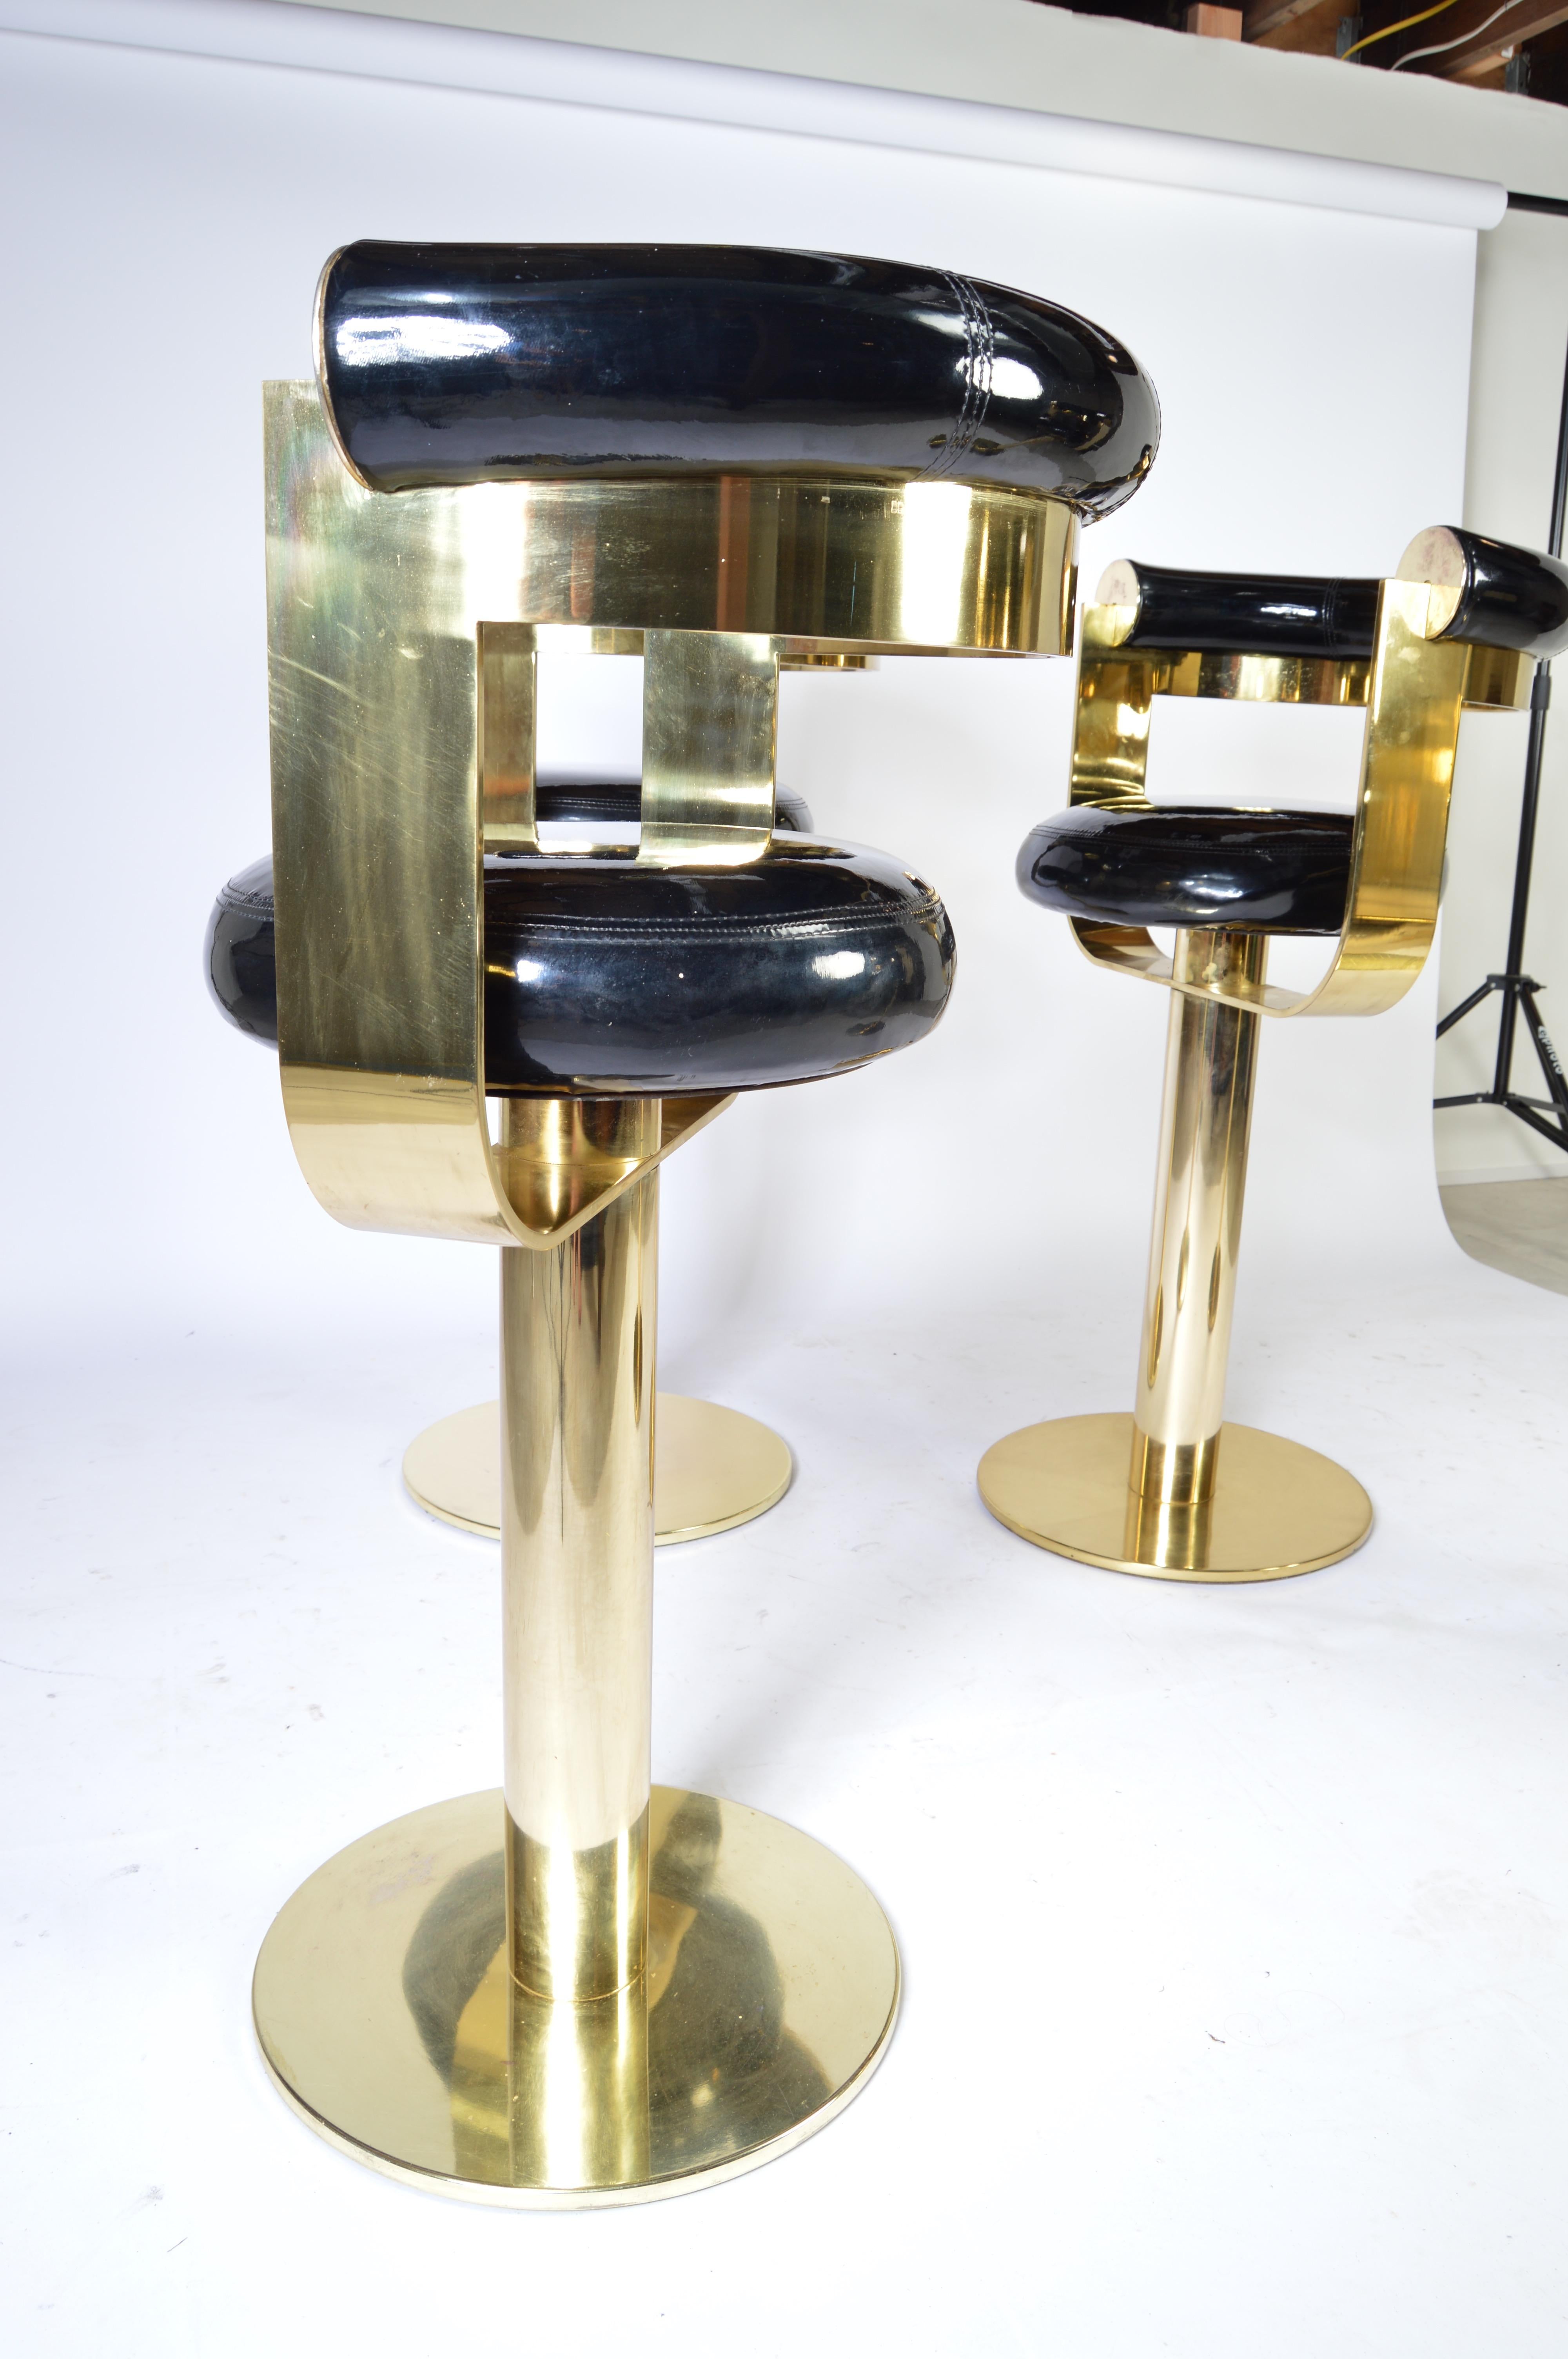 Custom Brass Counter Bar Stools in the Manner of Design For Leisure, circa 1970 (Moderne der Mitte des Jahrhunderts)